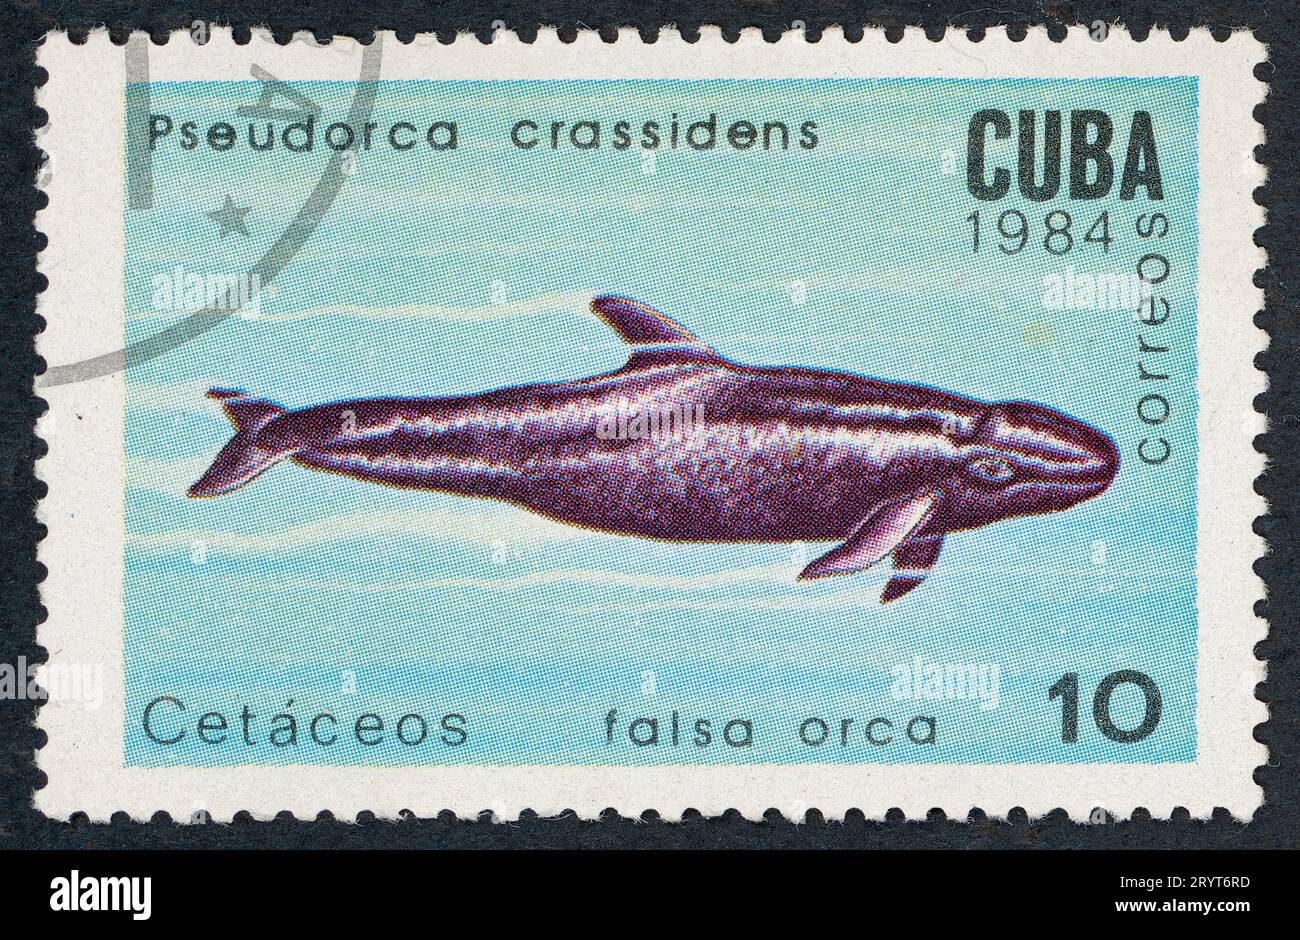 La falsa balena assassina (Pseudorca crassidens). Serie di cetacei. Francobollo emesso a Cuba nel 1984. Foto Stock